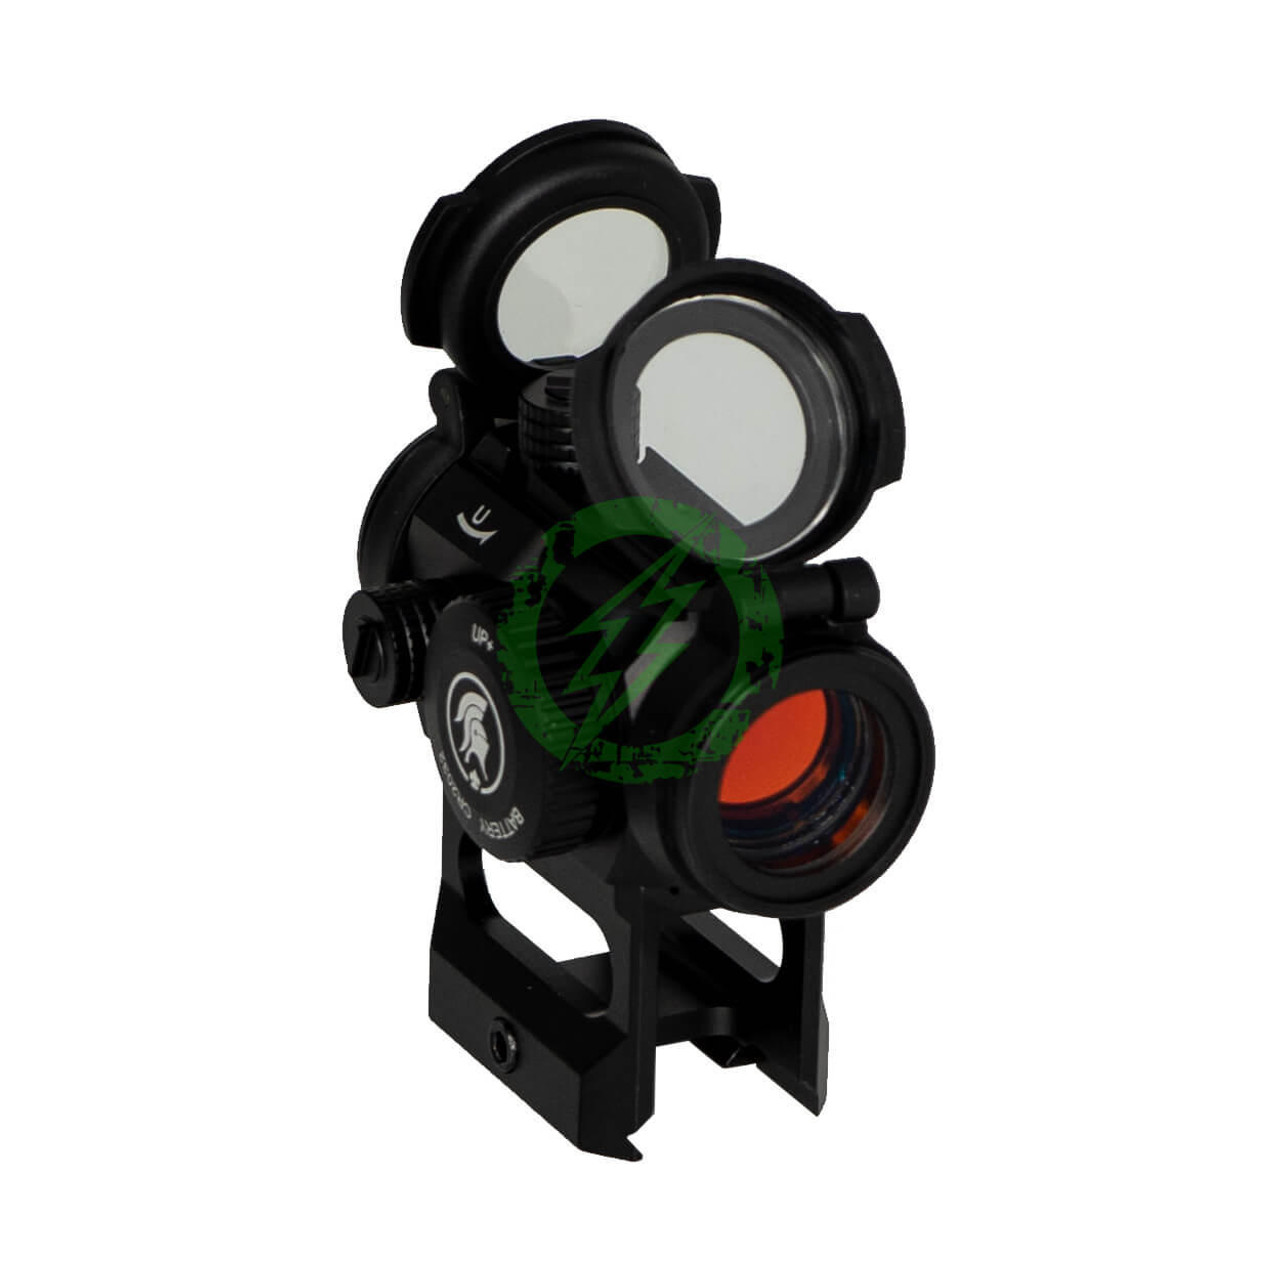  Lancer Tactical 2 MOA Green Dot Sight with Riser Mount 